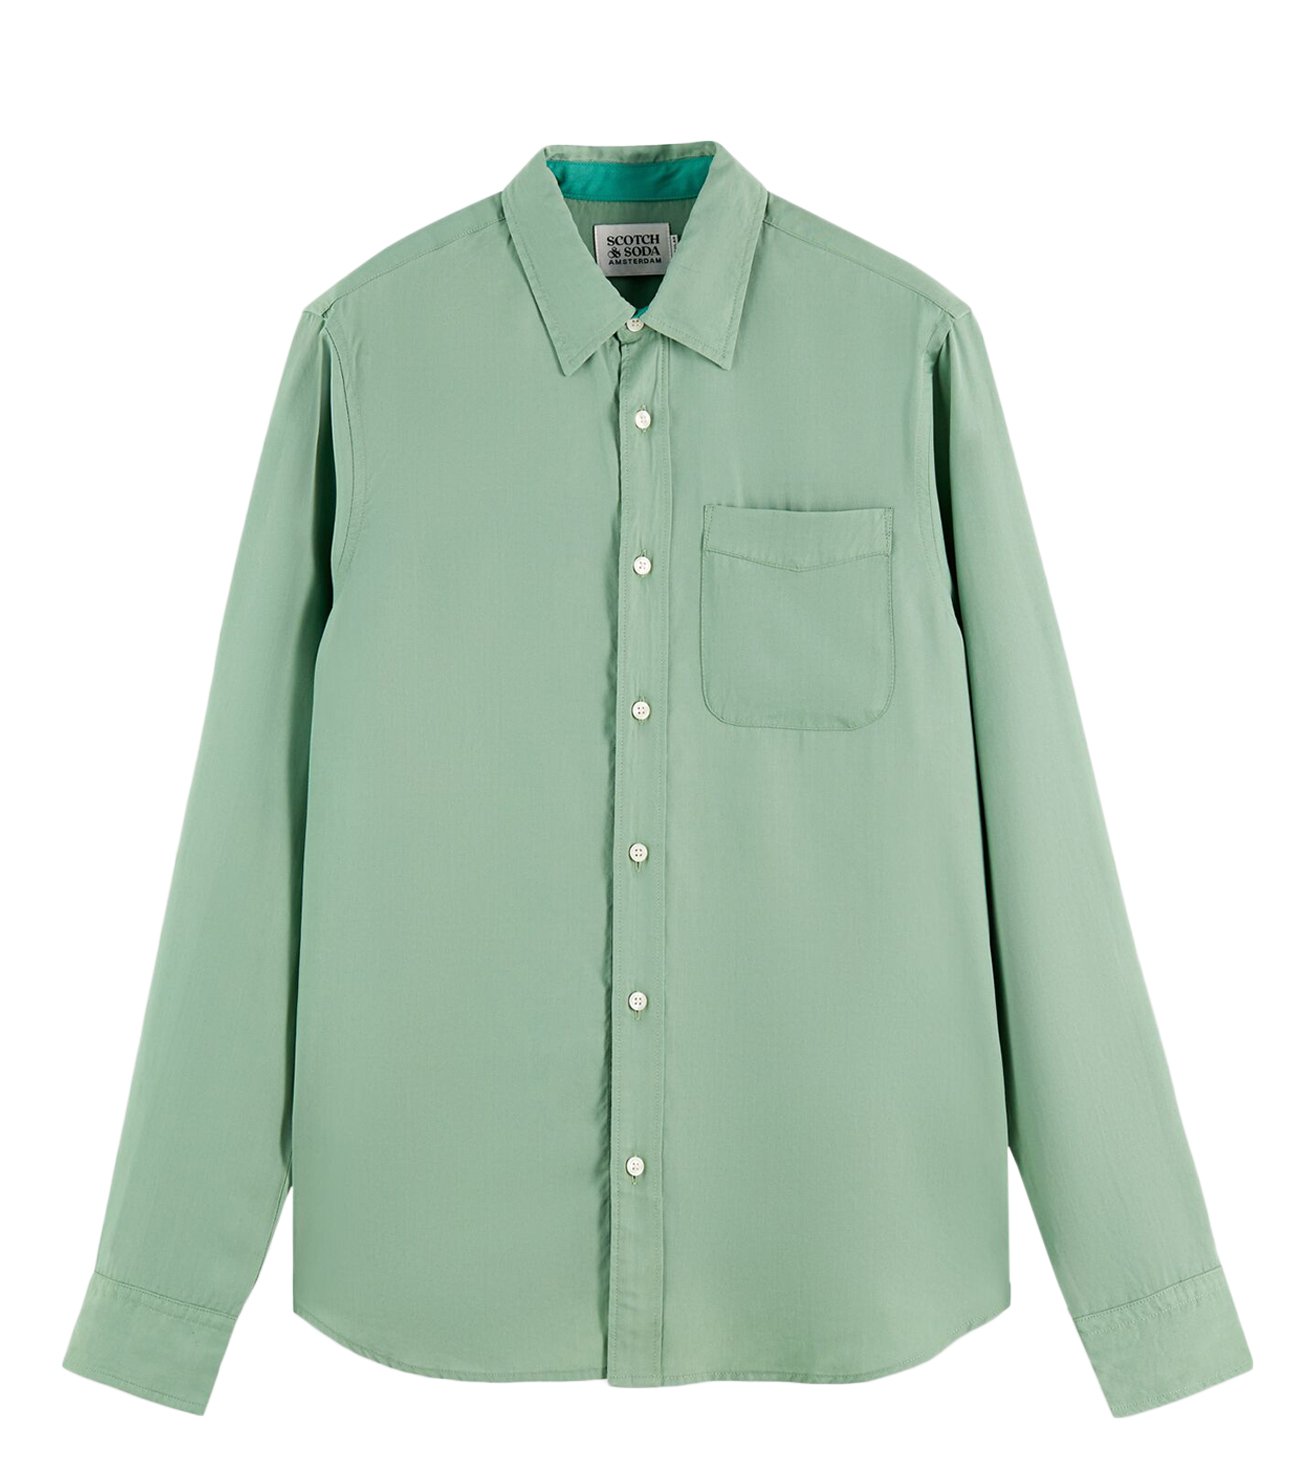 Buy Scotch & Soda Green Classic Regular Fit Shirt only at Tata CLiQ Luxury